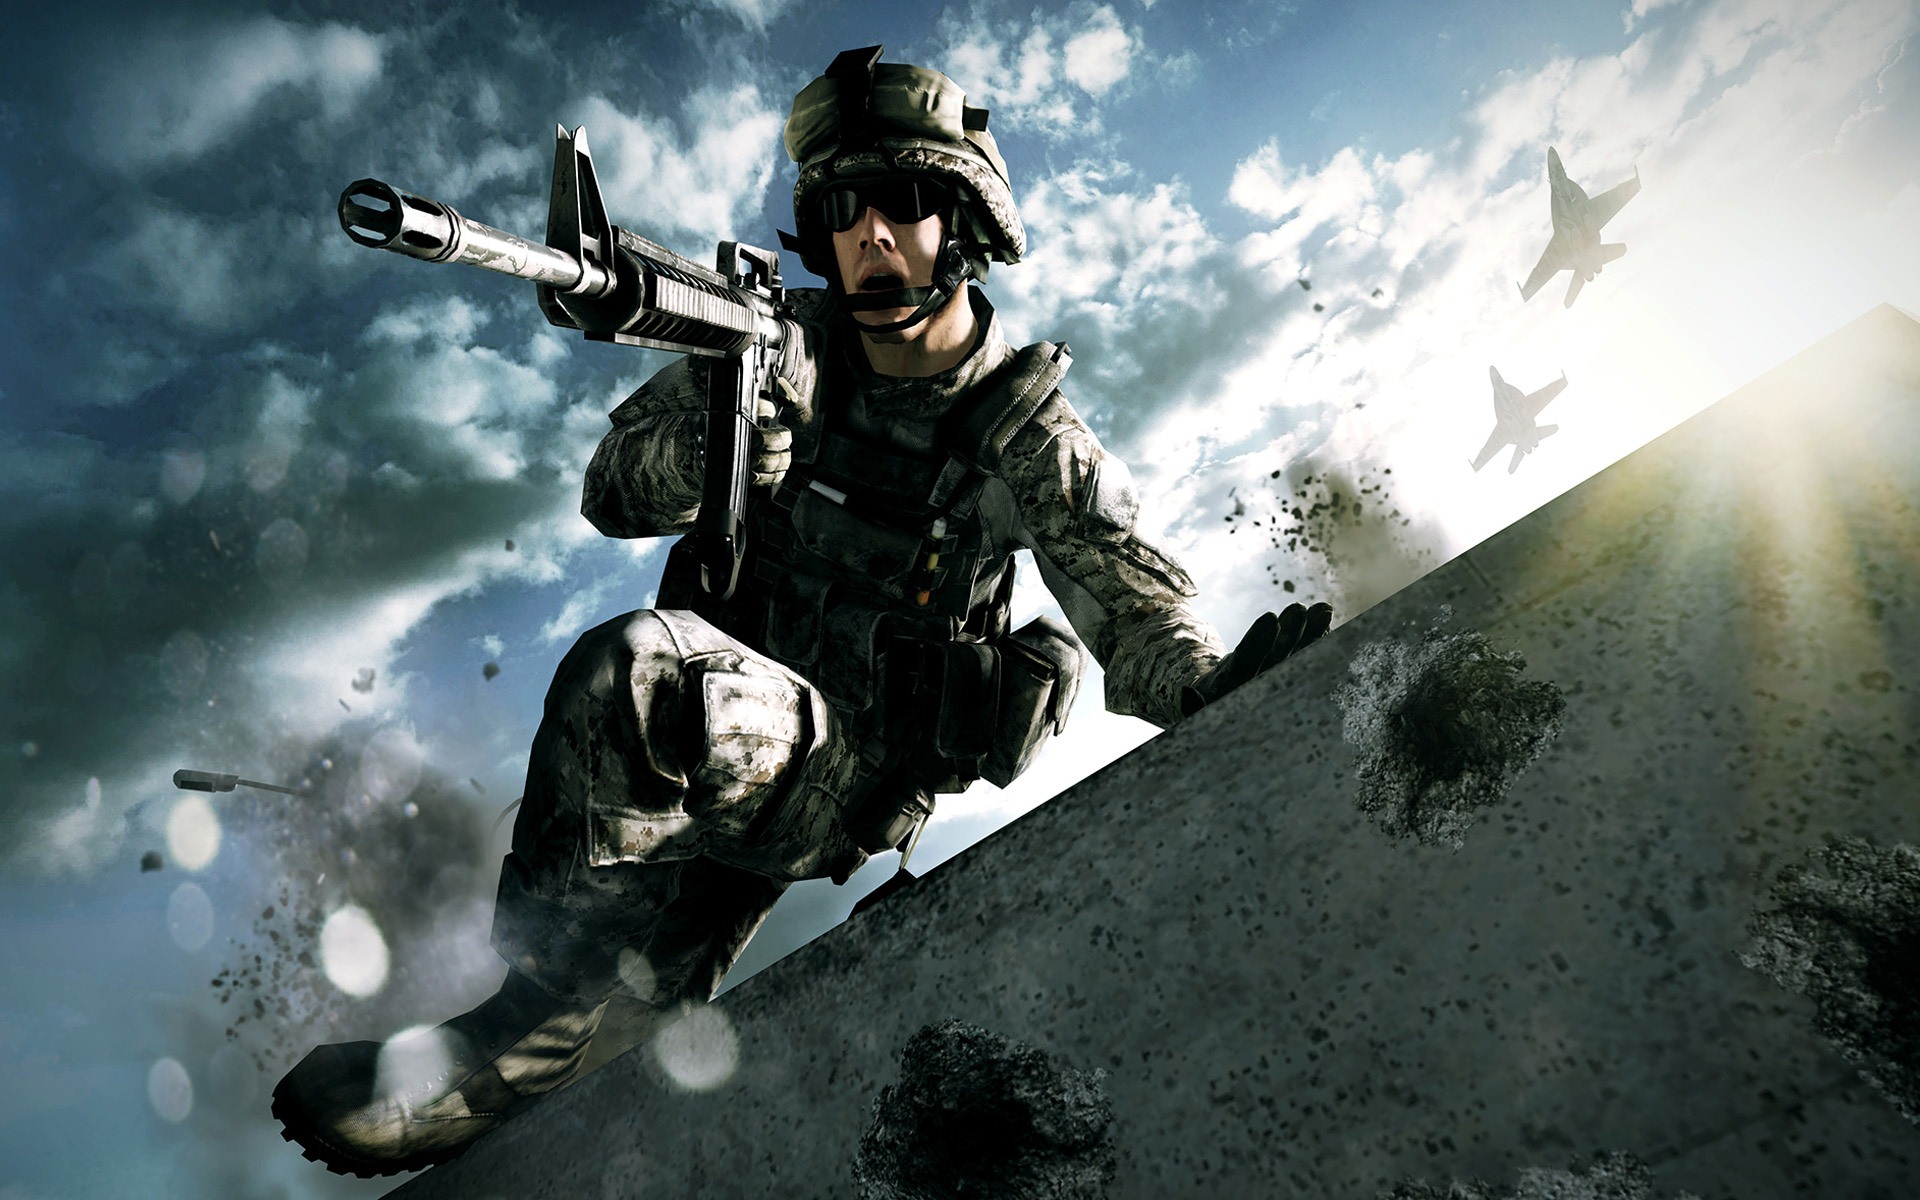 Battlefield 3 HD wallpapers - 1920x1200 Wallpaper Download